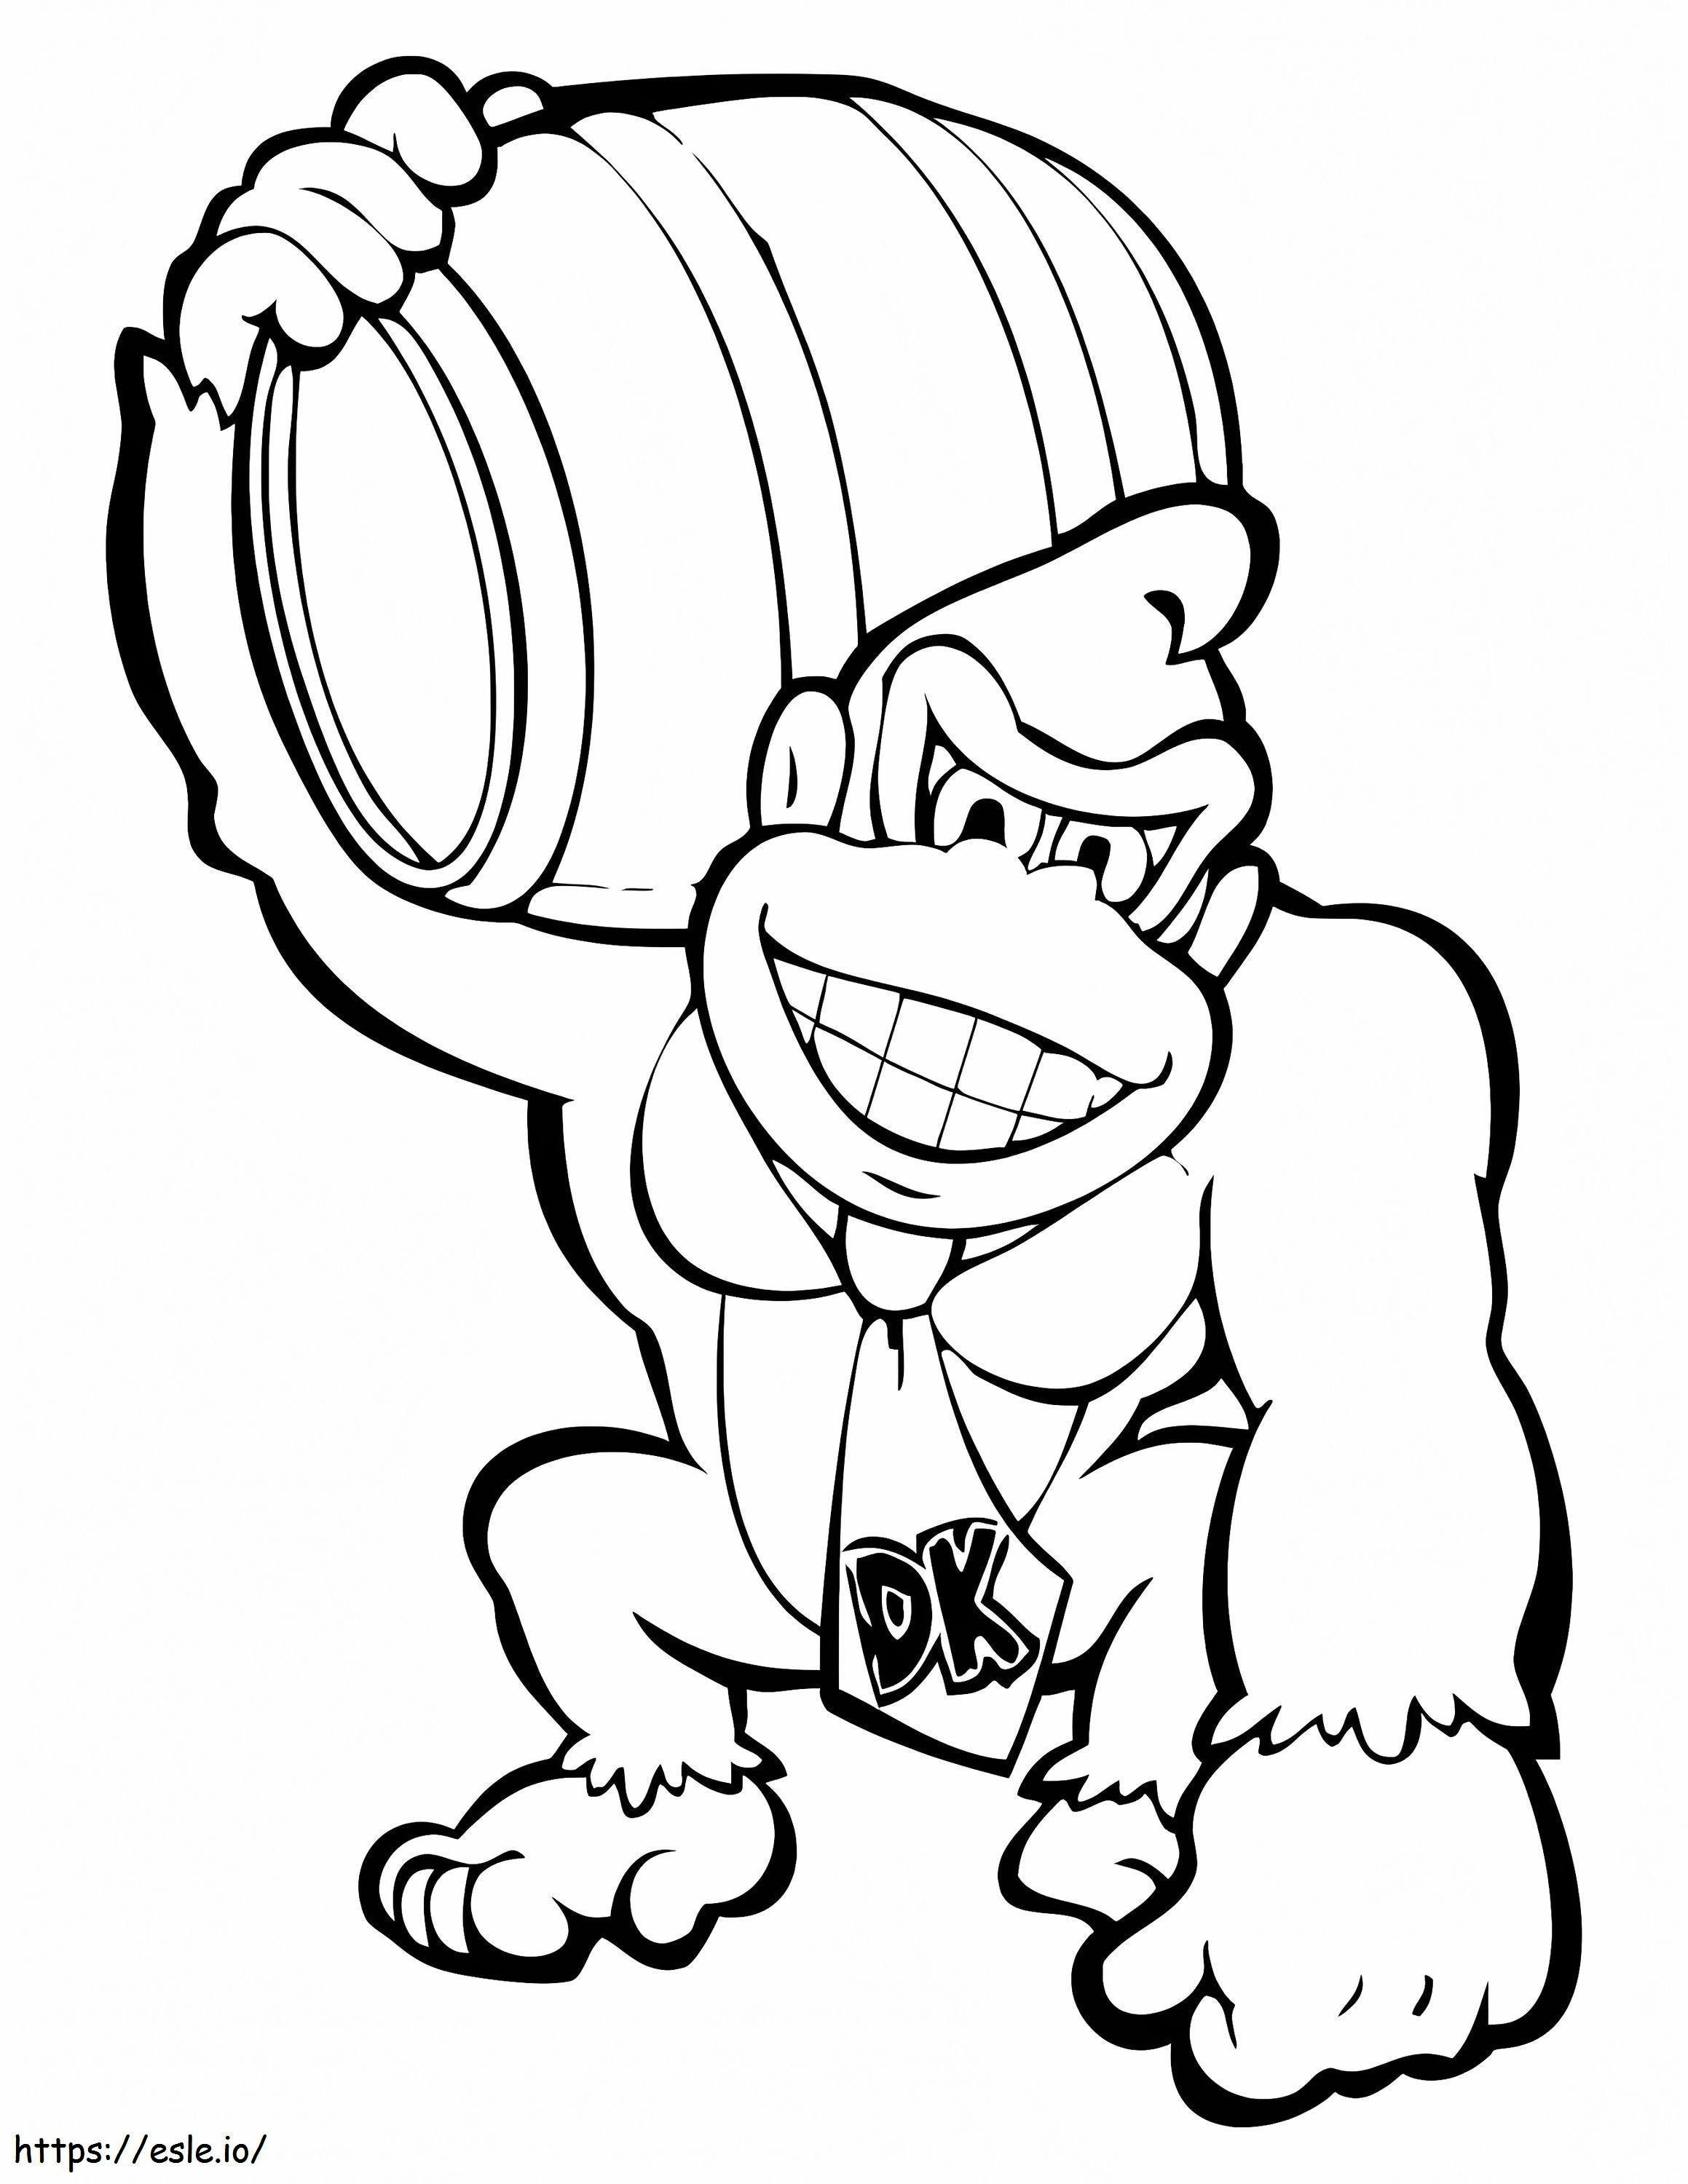 Coloriage Mario Donkey Kong à imprimer dessin